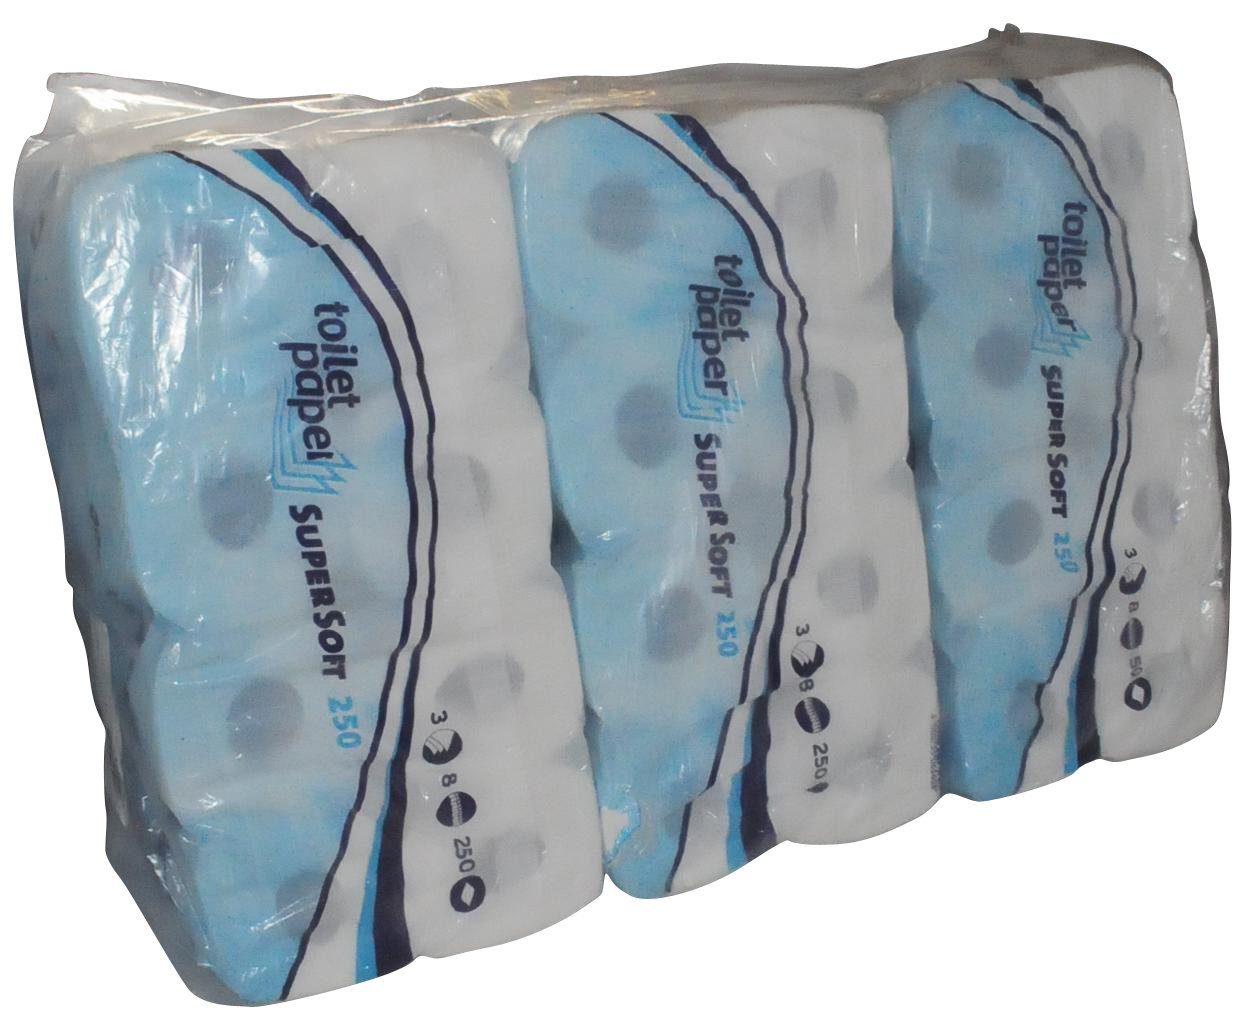 WEPA Toilettenpapier Toilettenpapier SUPER SOFT 3-lagig - 72 Rollen á 2